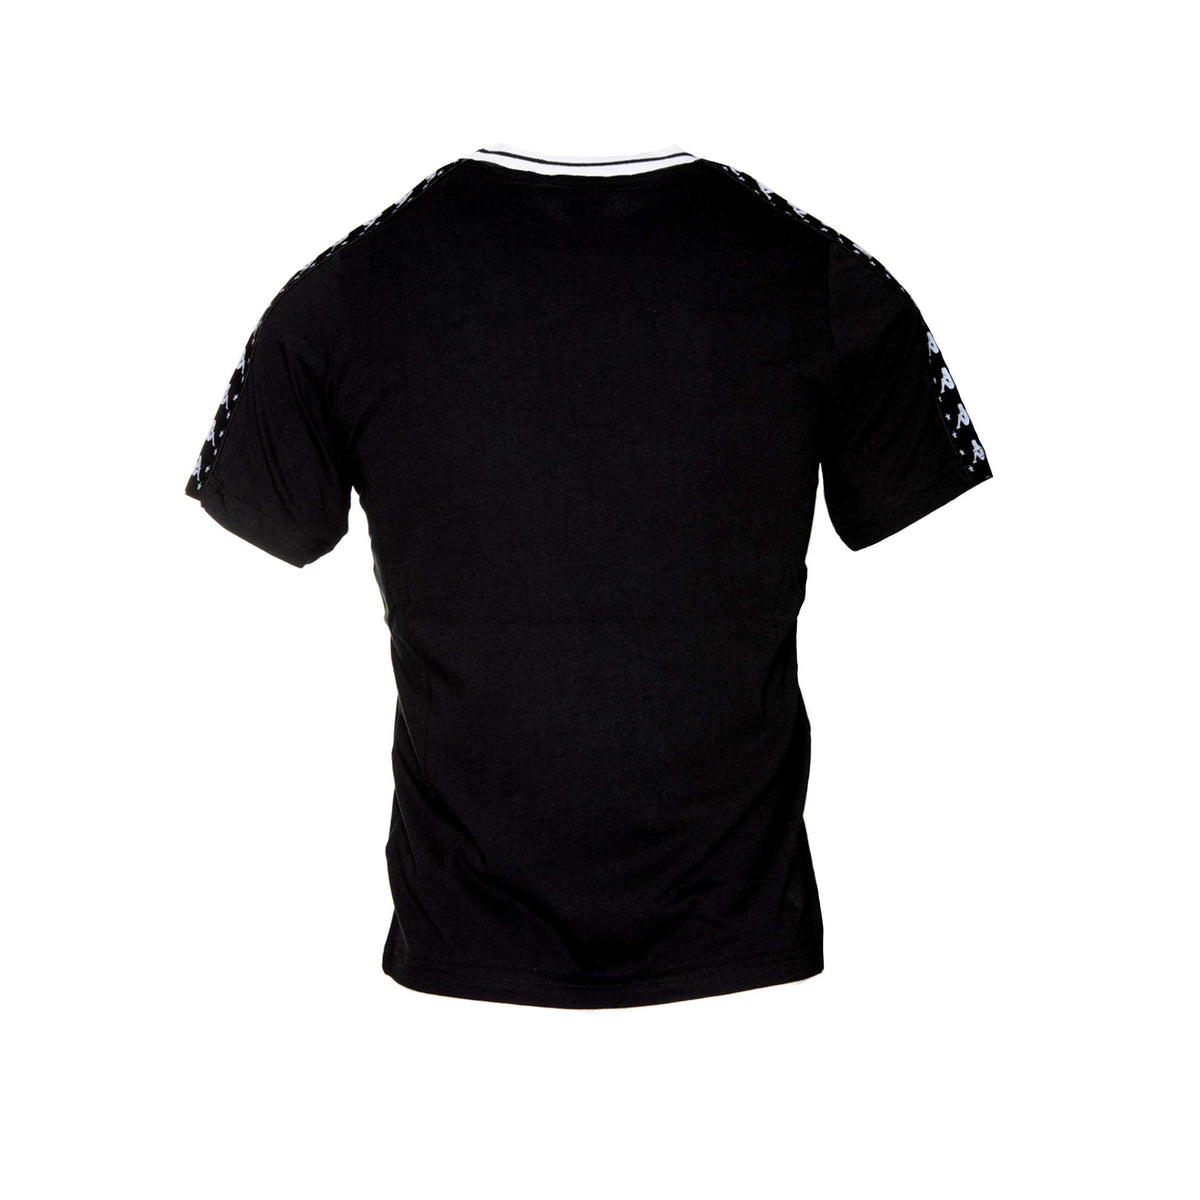 Kappa Authentic Anchen T-Shirt Black